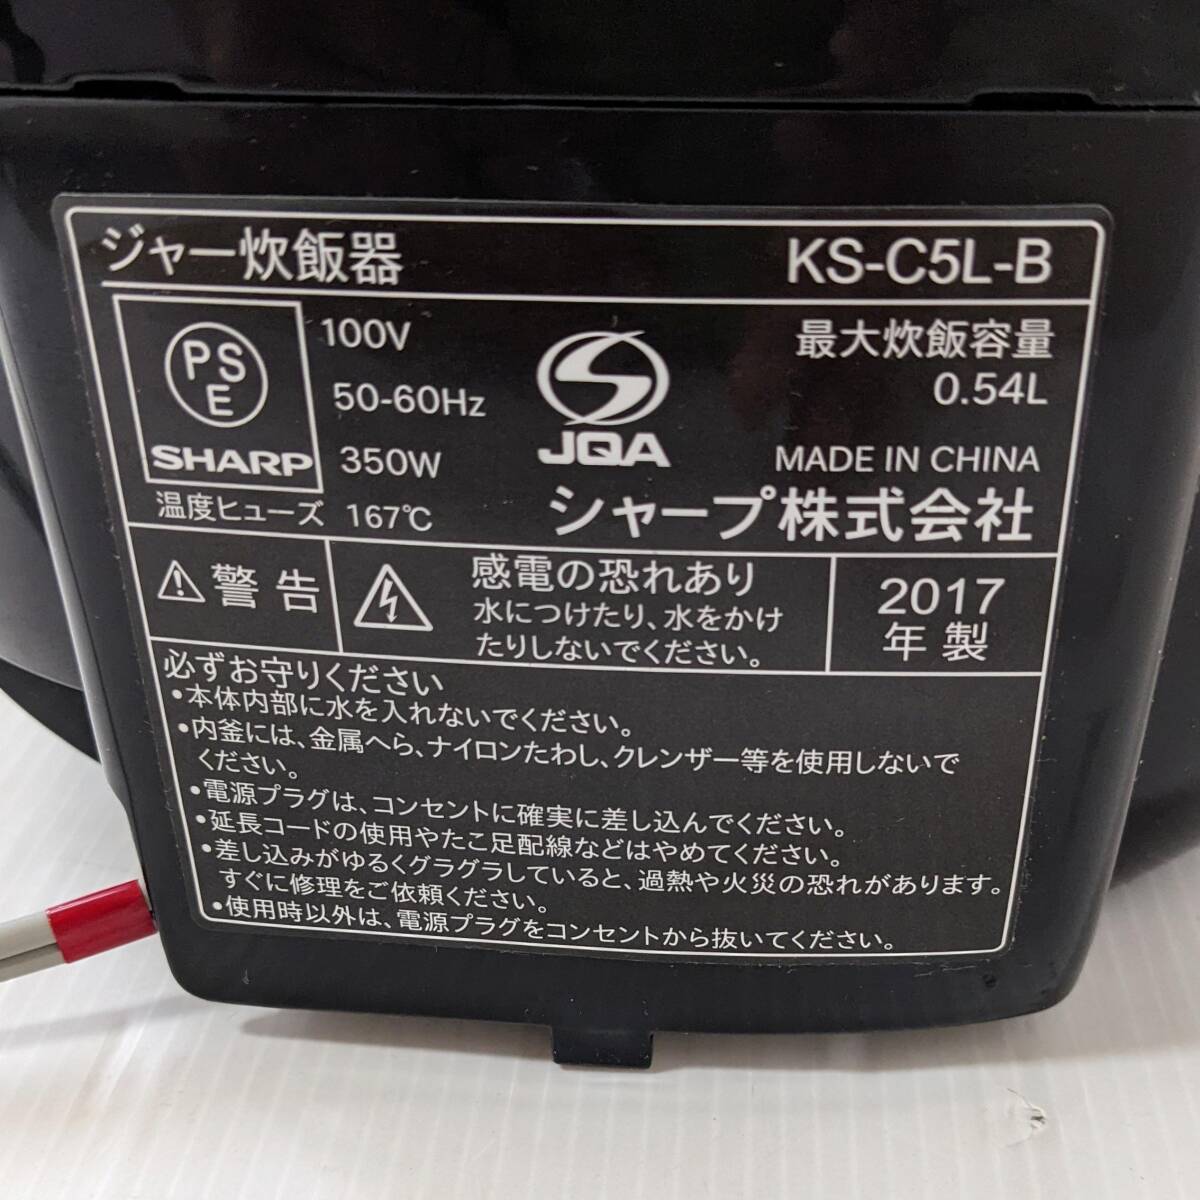 a678 SHARP シャープ マイコン ジャー 炊飯器 0.54L 3合炊き KS-C5L ブラック 2017年製 中古の画像3